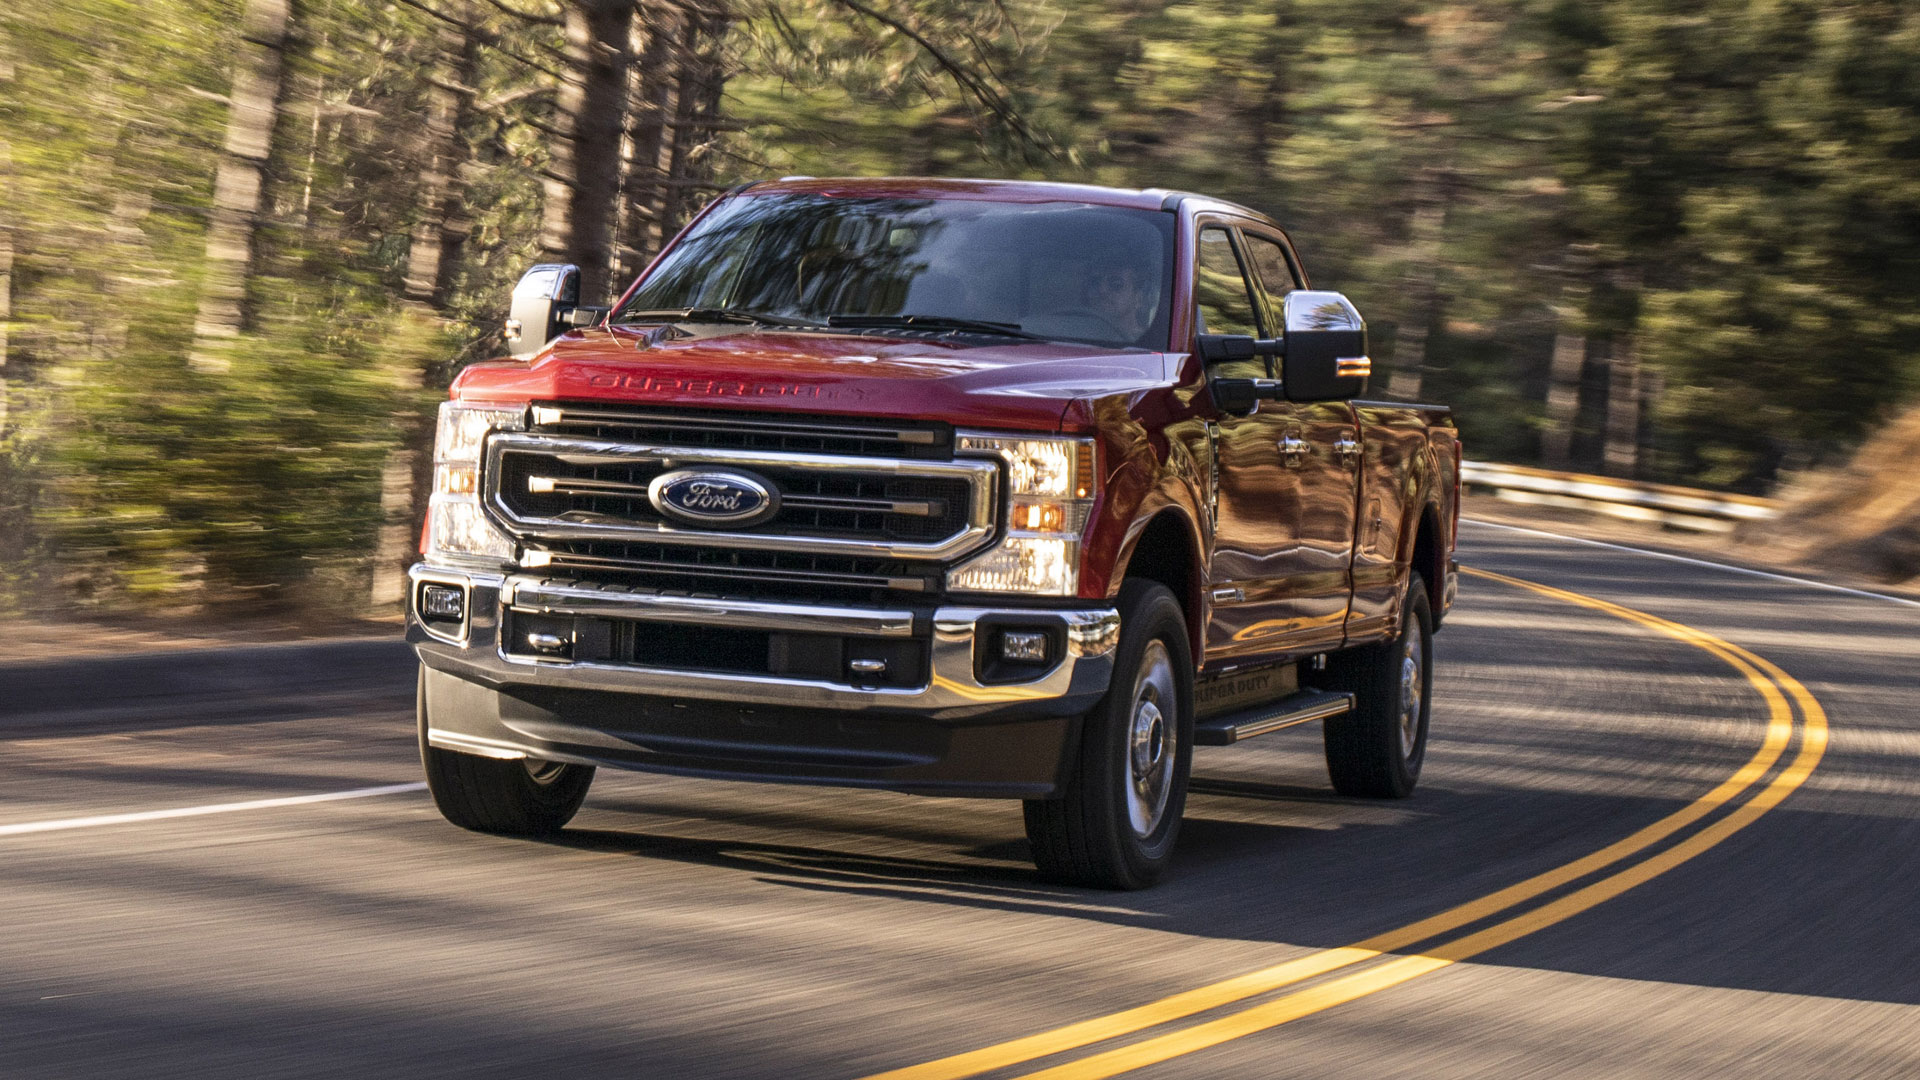 Pickup-Unfälle: Ford soll 1,7 Milliarden Dollar Schadensersatz zahlen